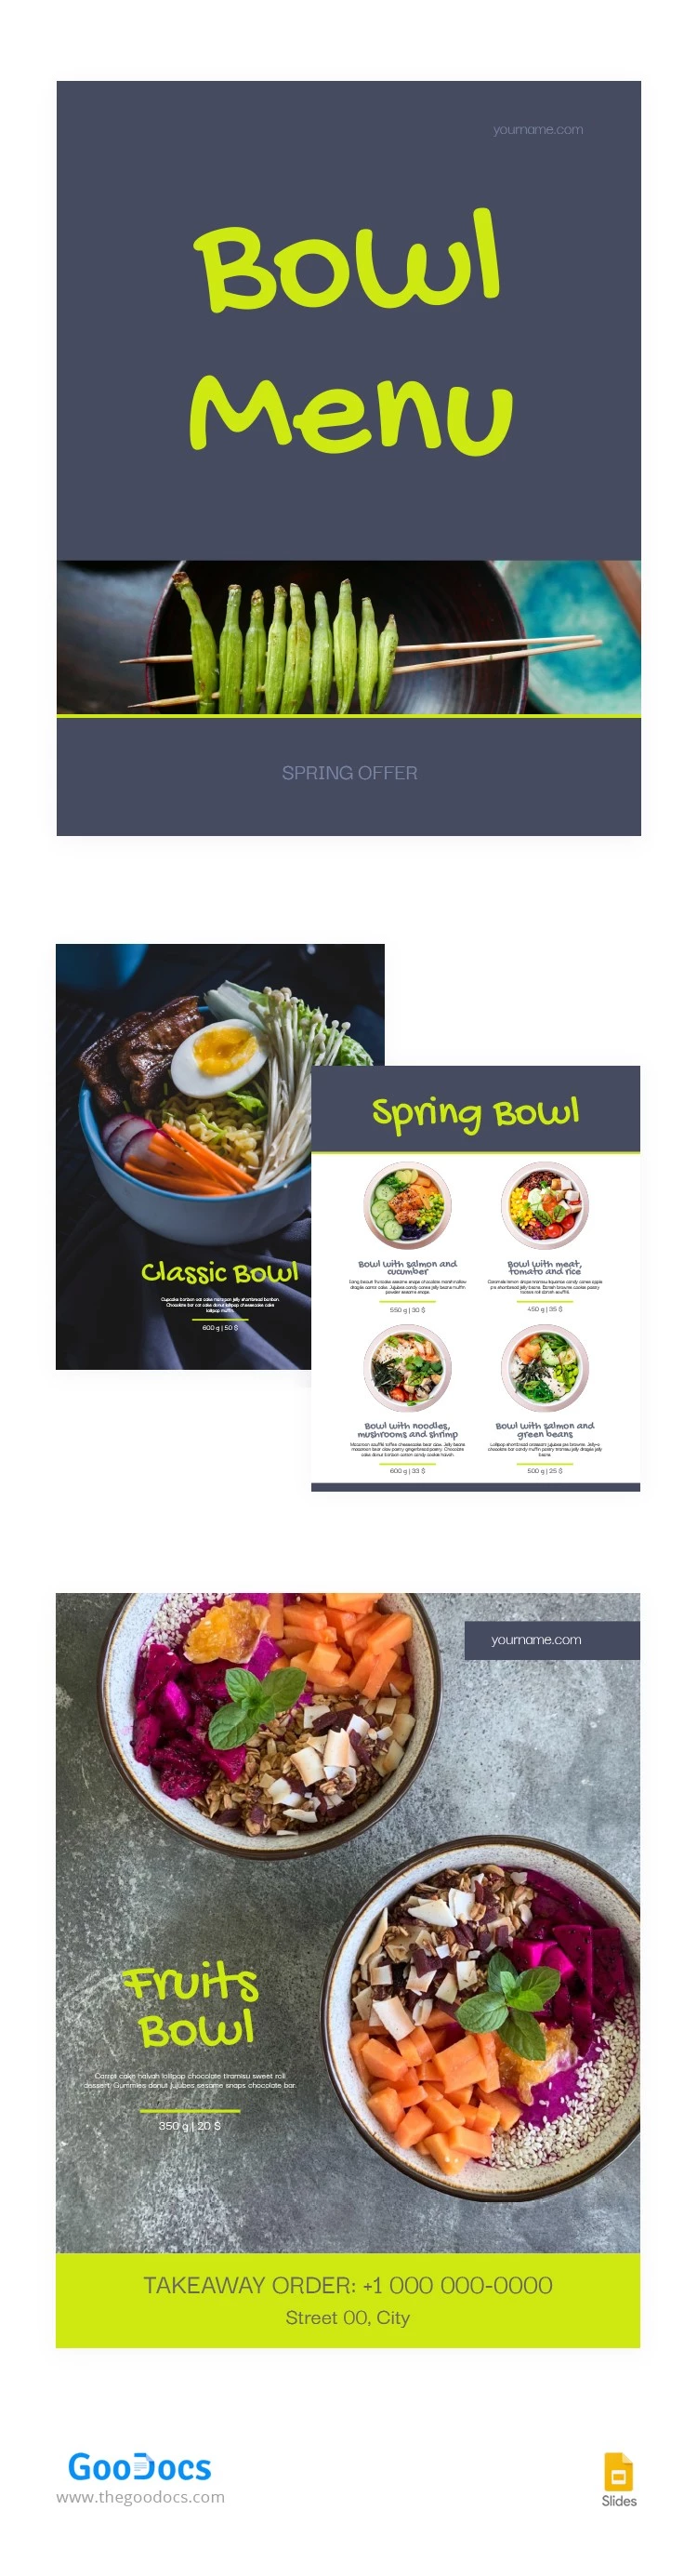 Spring Bowl Menu - free Google Docs Template - 10063712